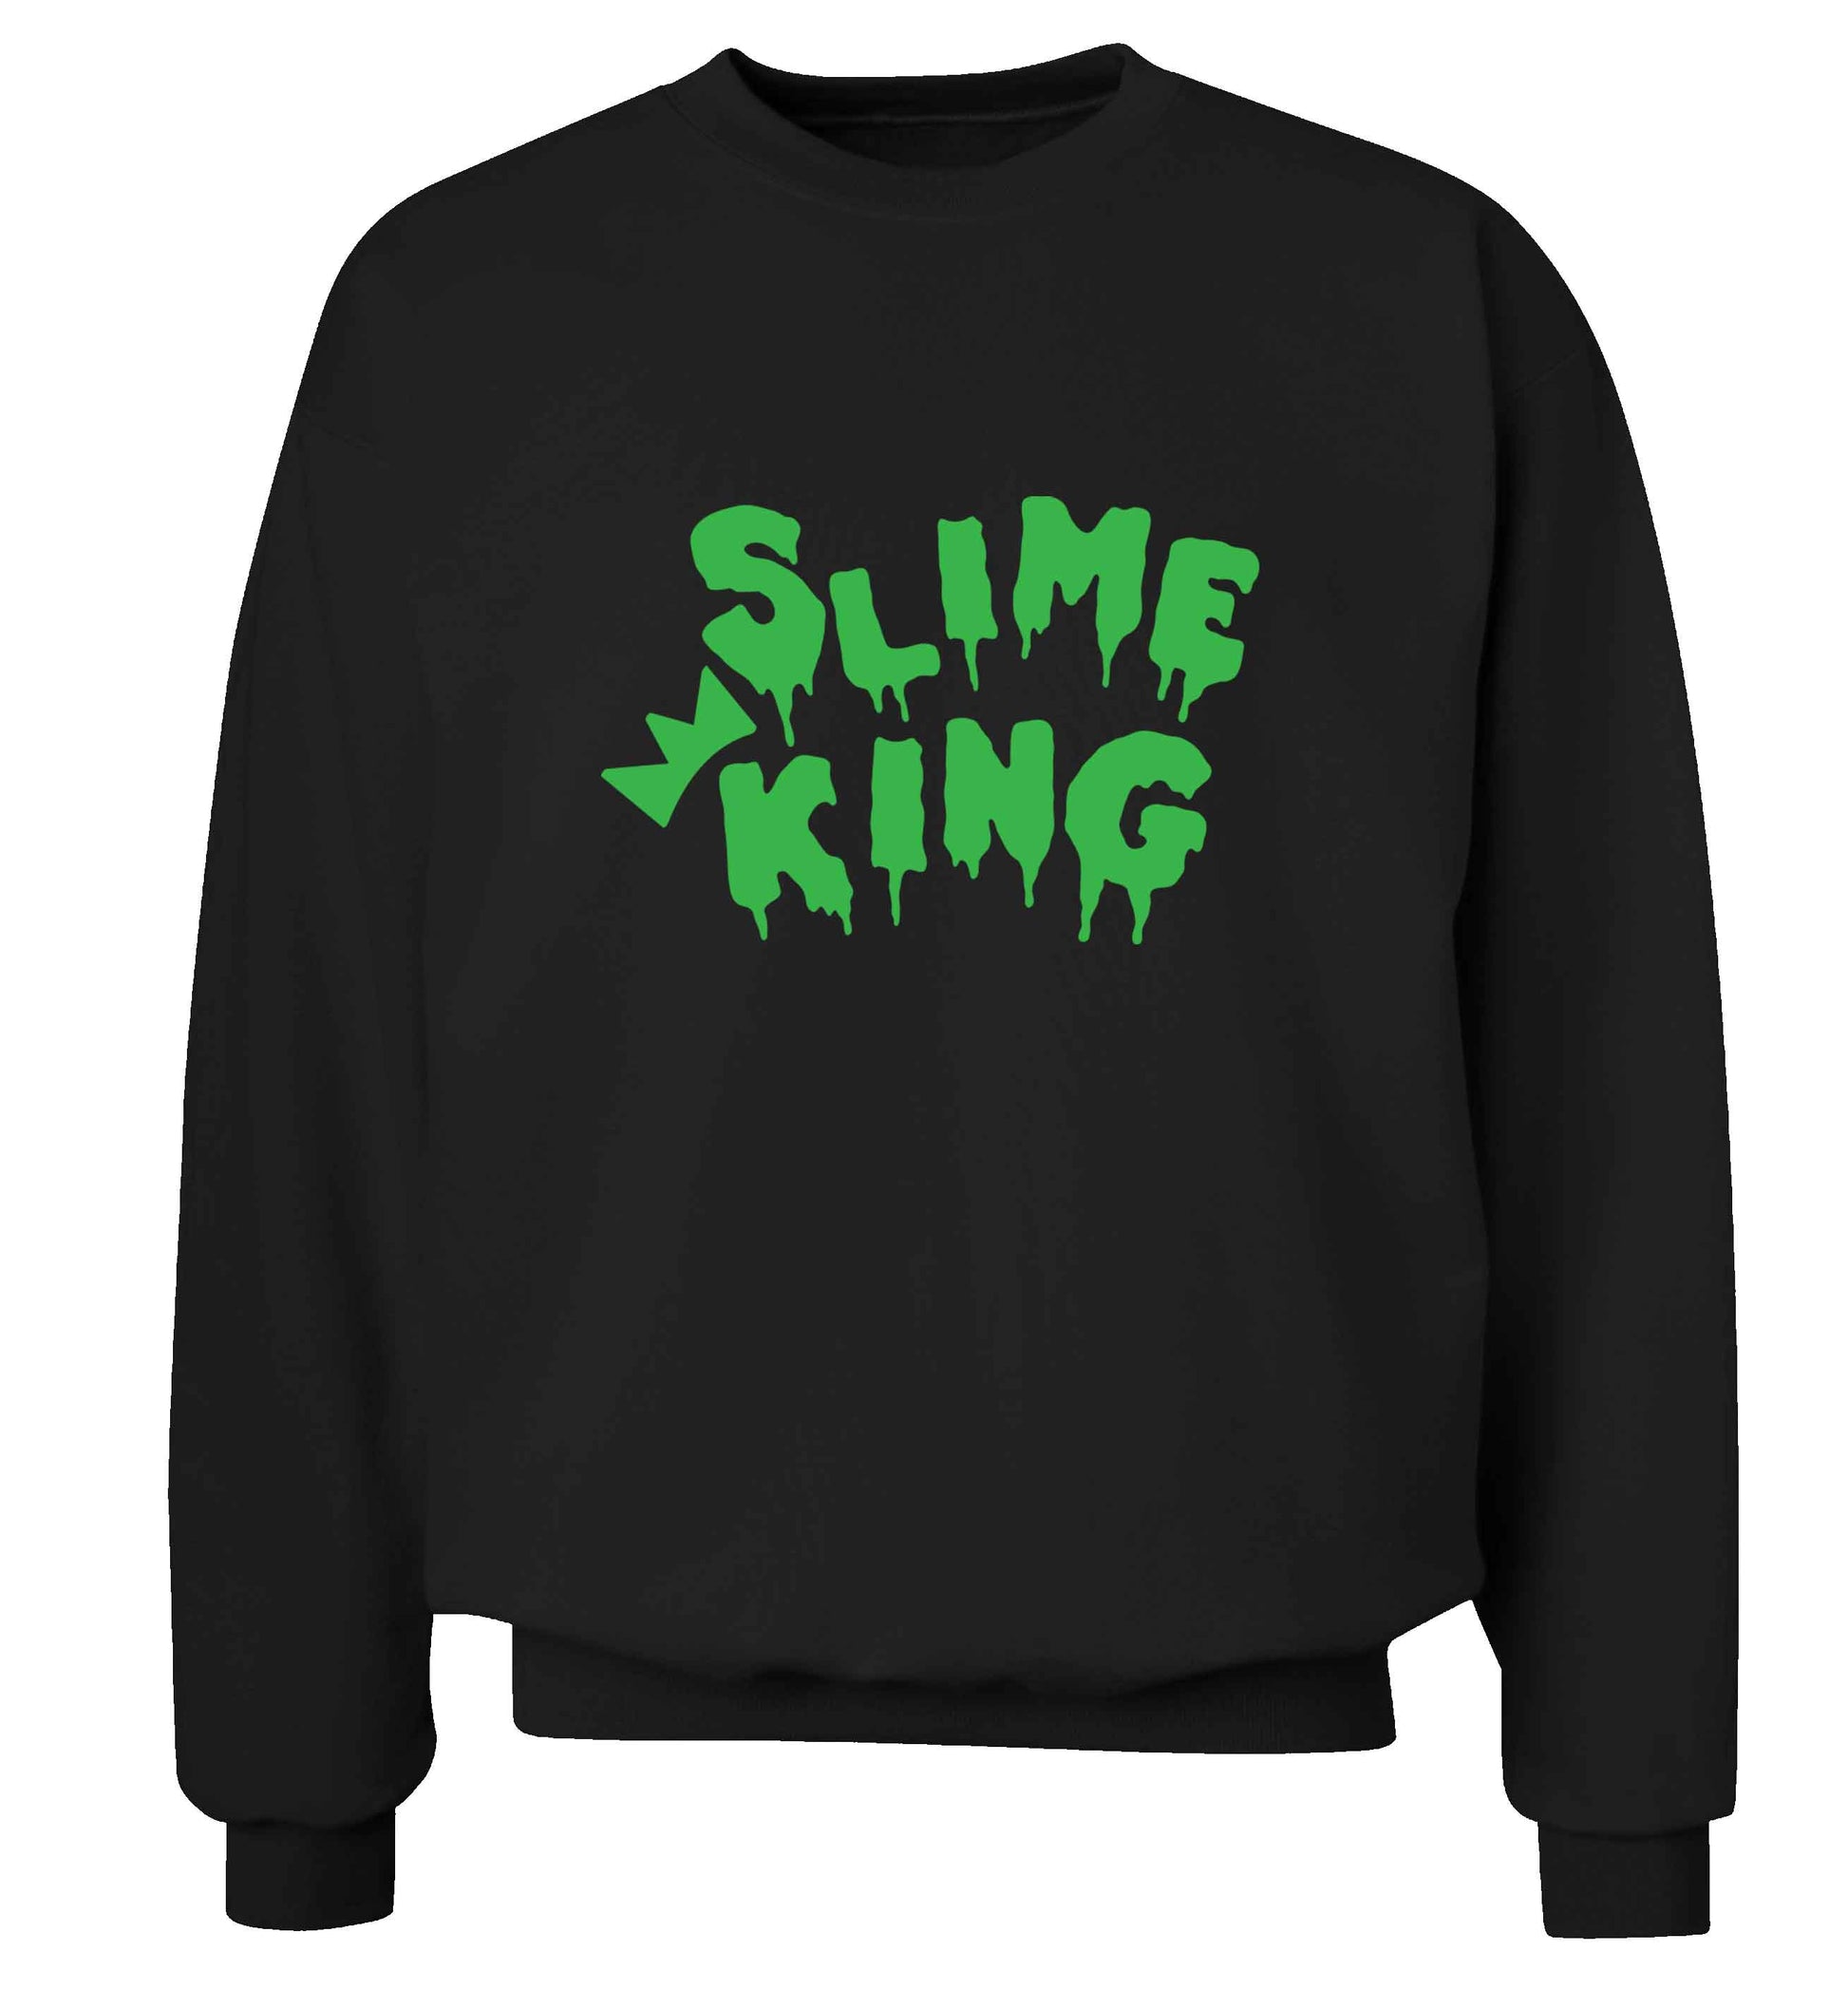 Neon green slime king adult's unisex black sweater 2XL